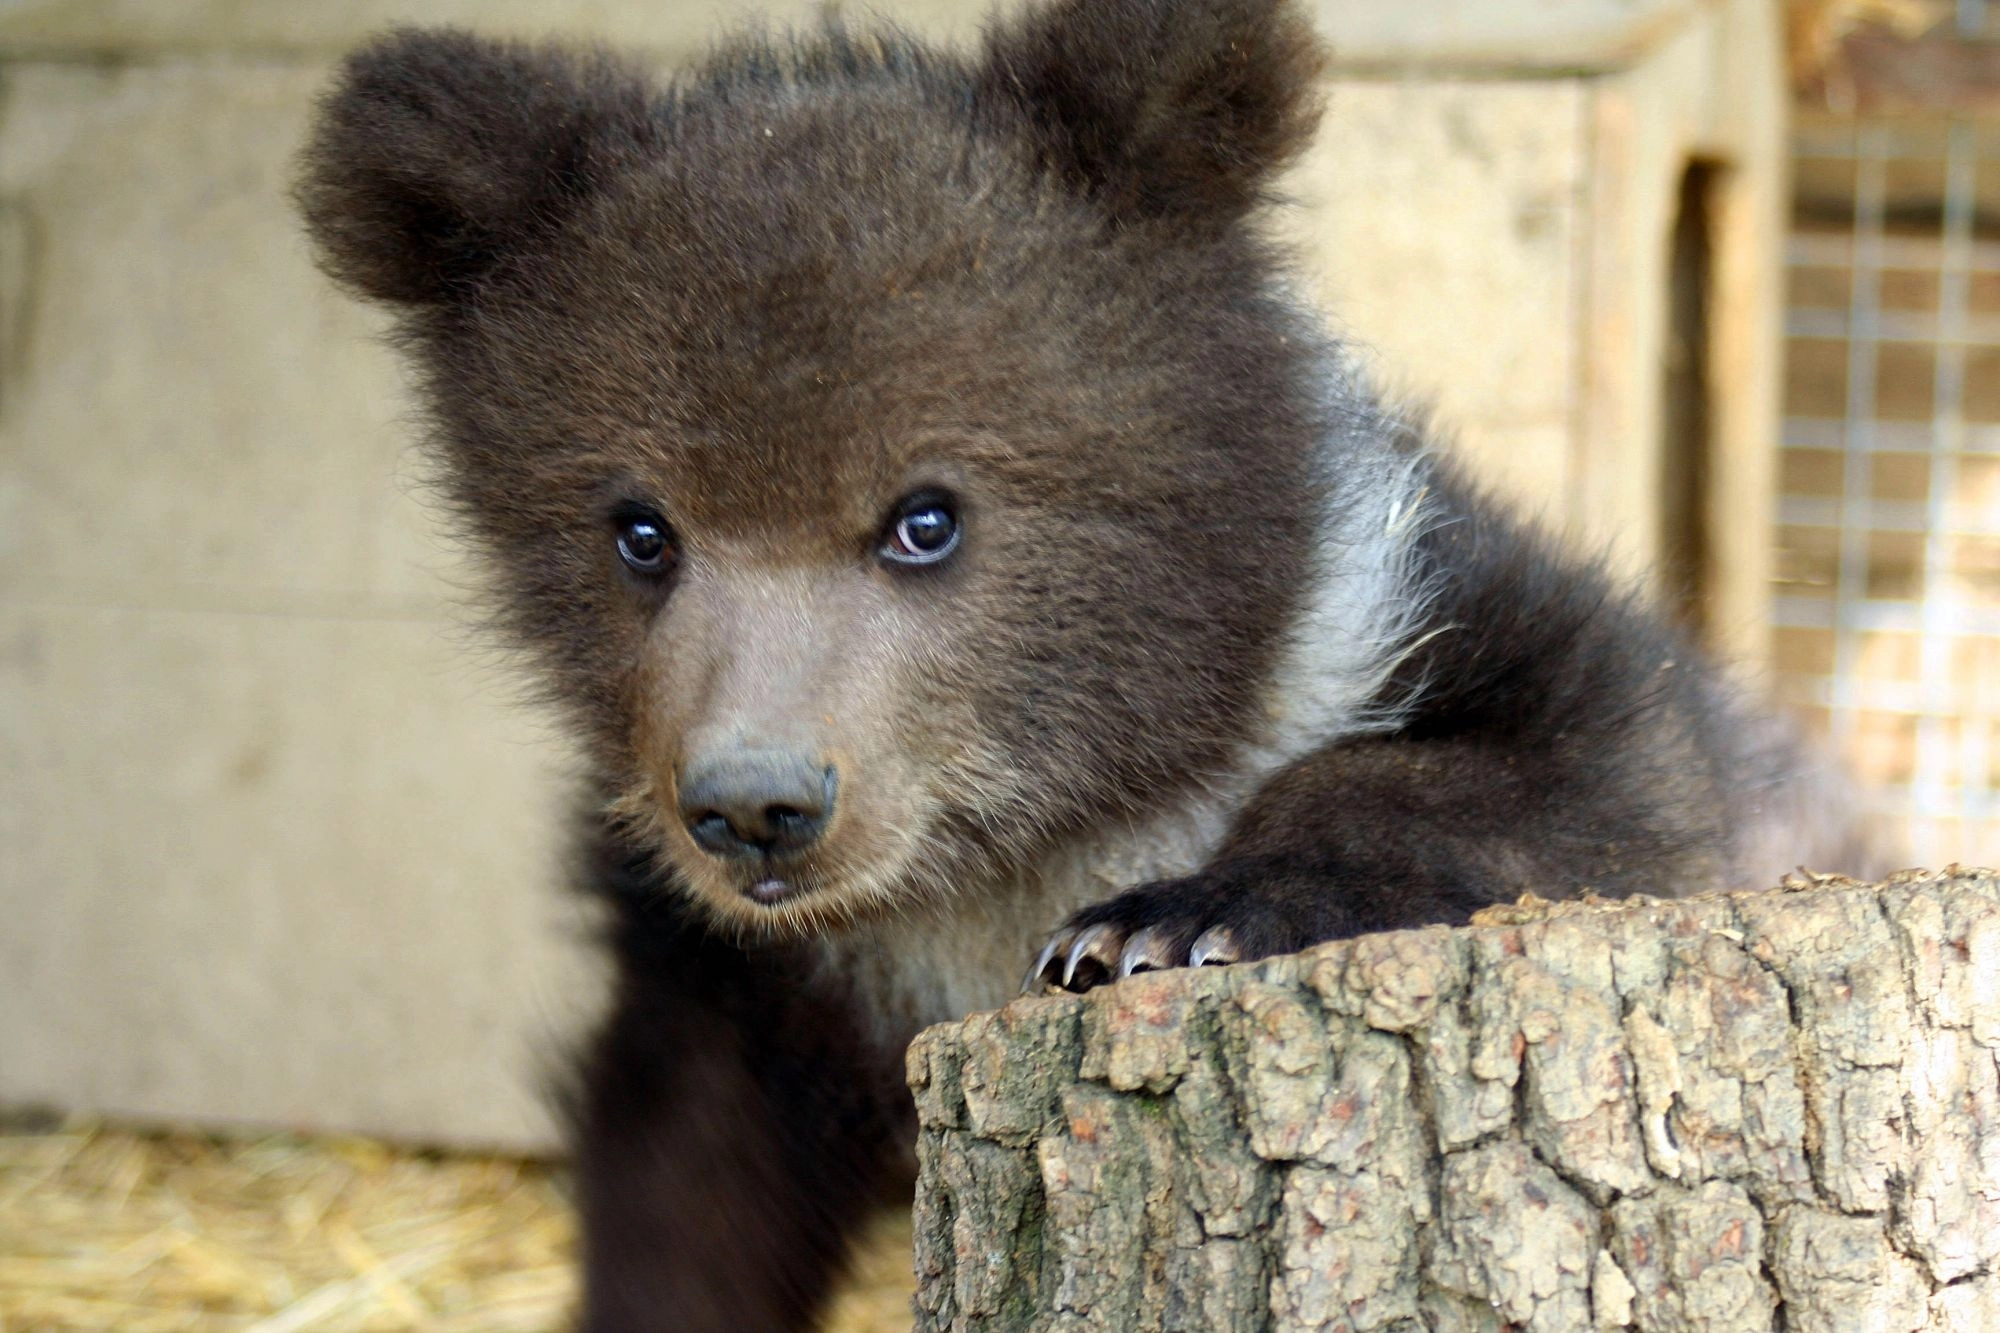 A bear cub at a sanctuary